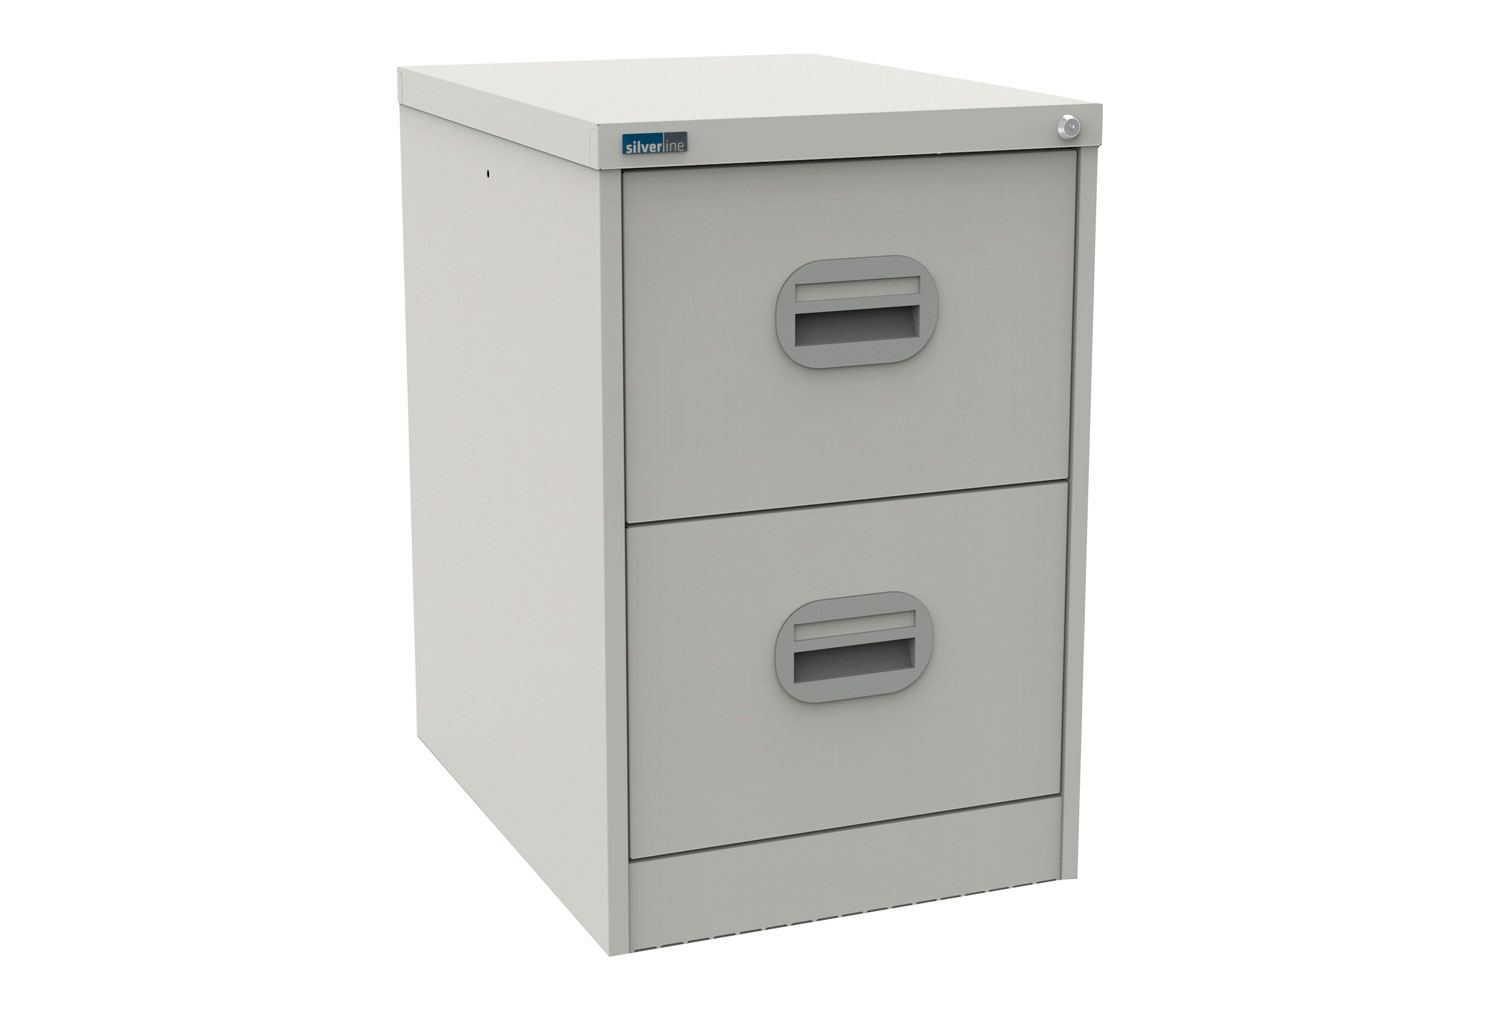 Silverline Kontrax 2 Drawer Filing Cabinet, 2 Drawer - 46wx62dx71h (cm), Traffic White